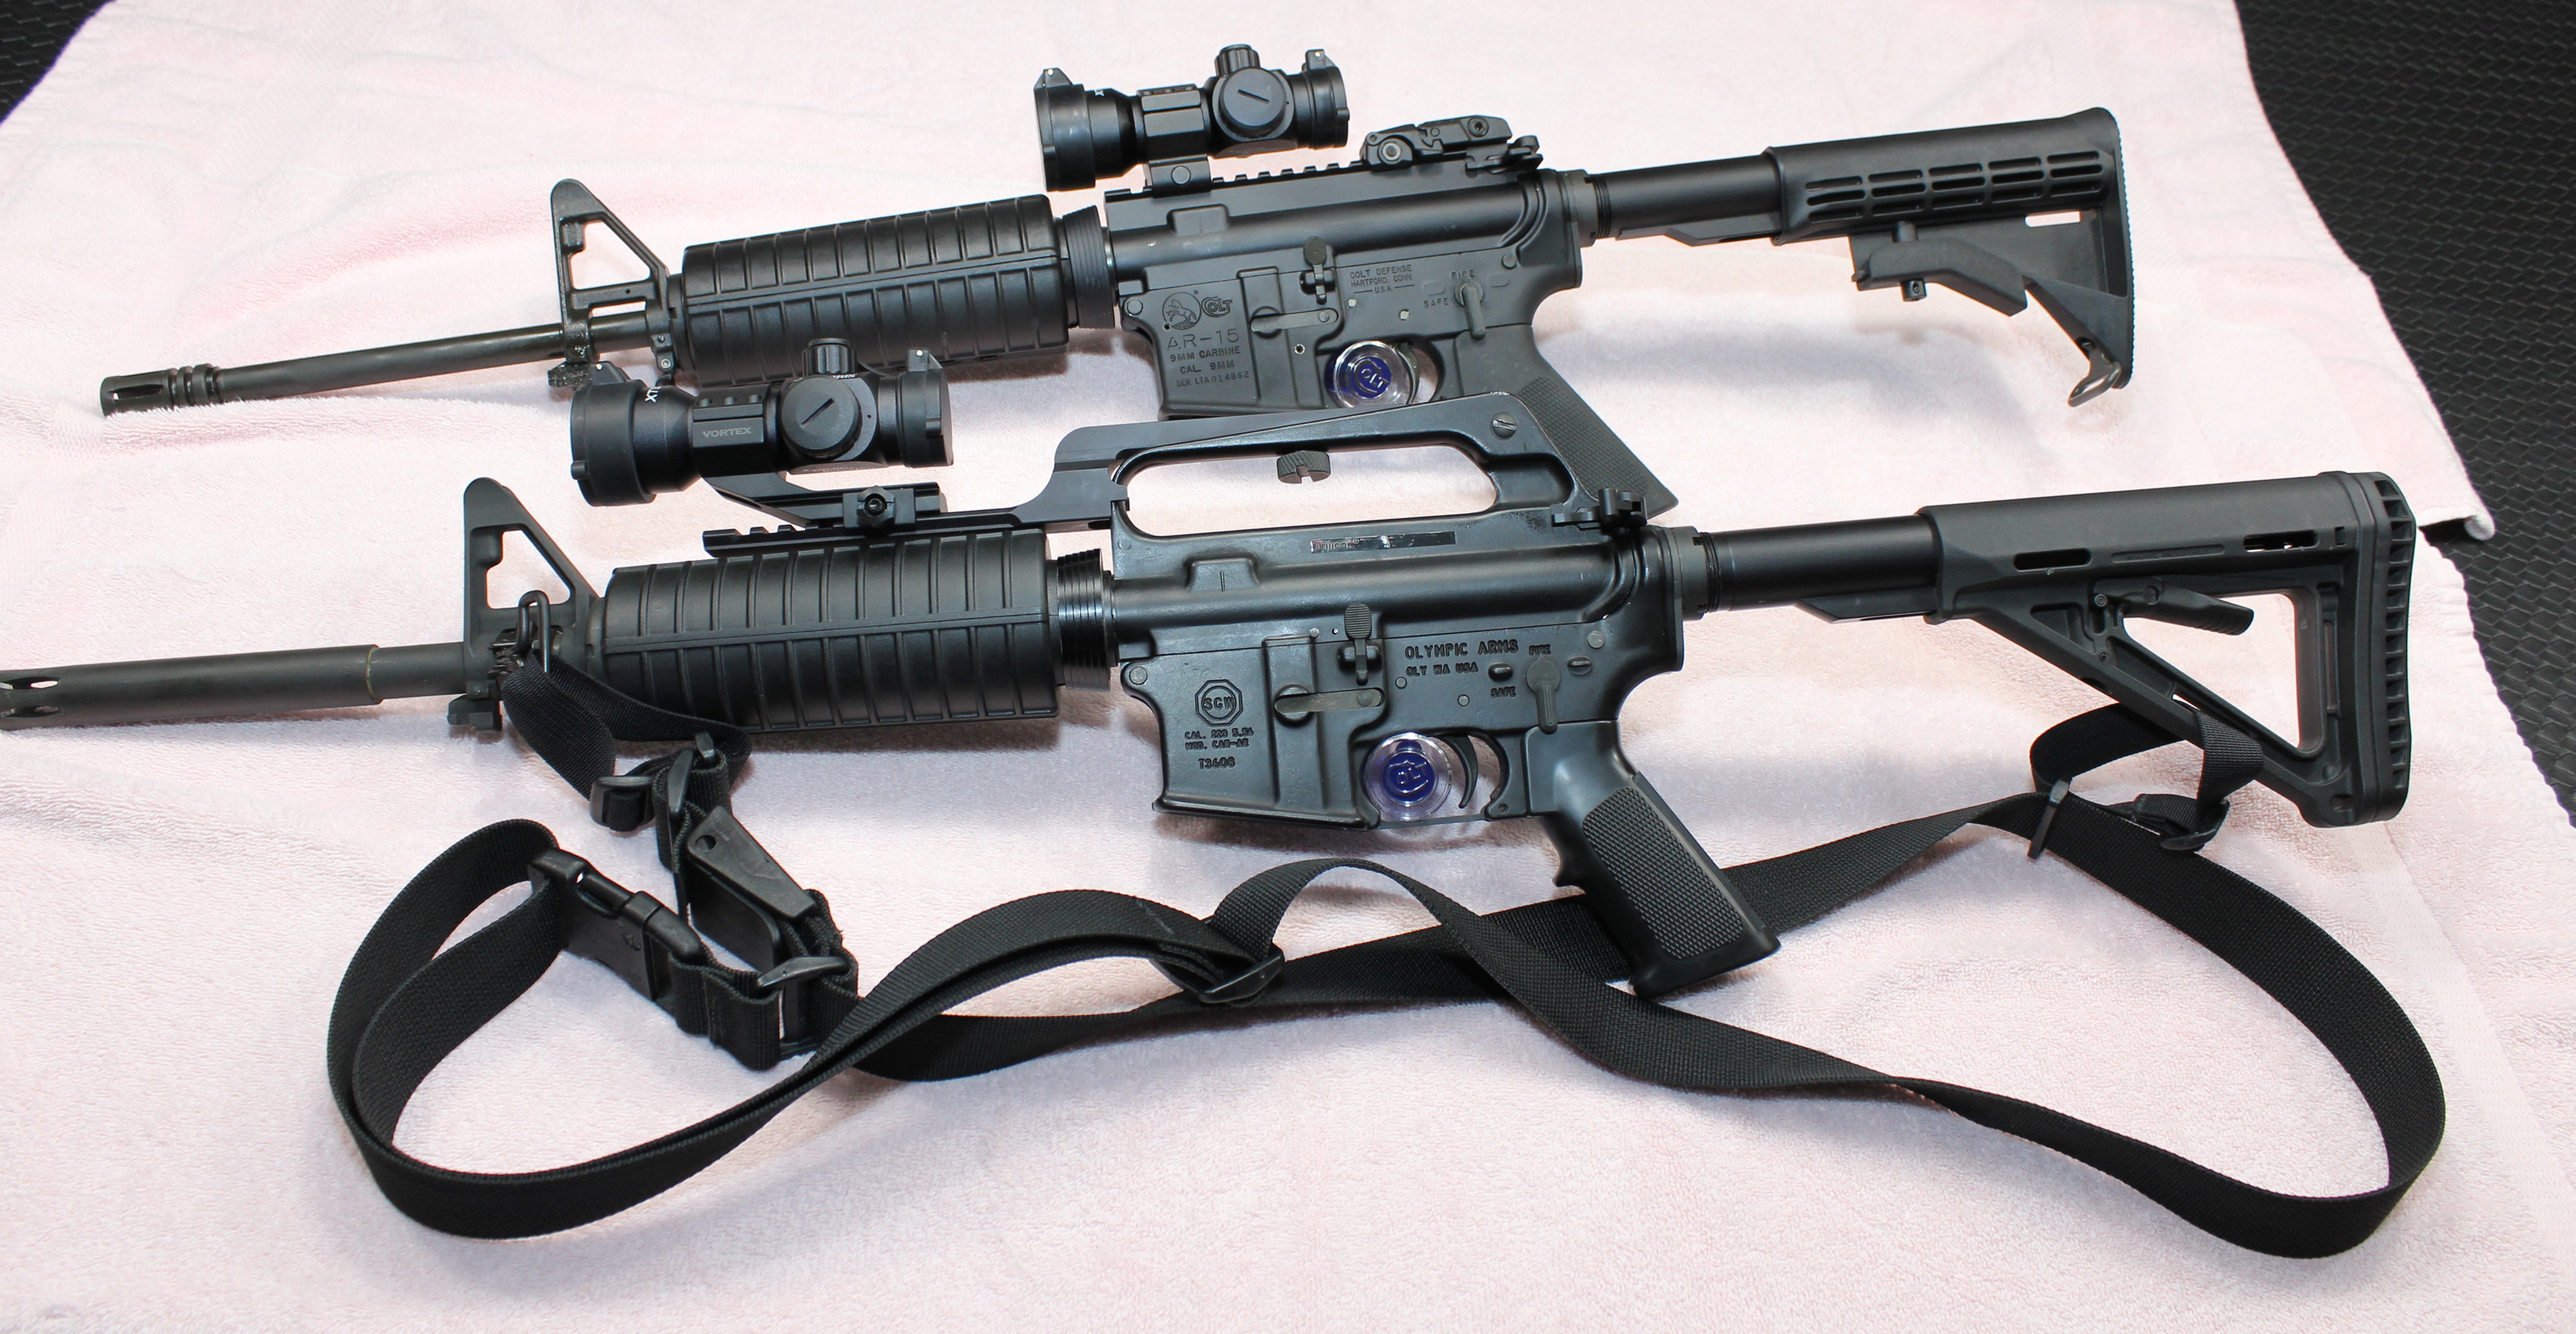 Colt-9mm-Olympic-Arms-45-ACP.jpg